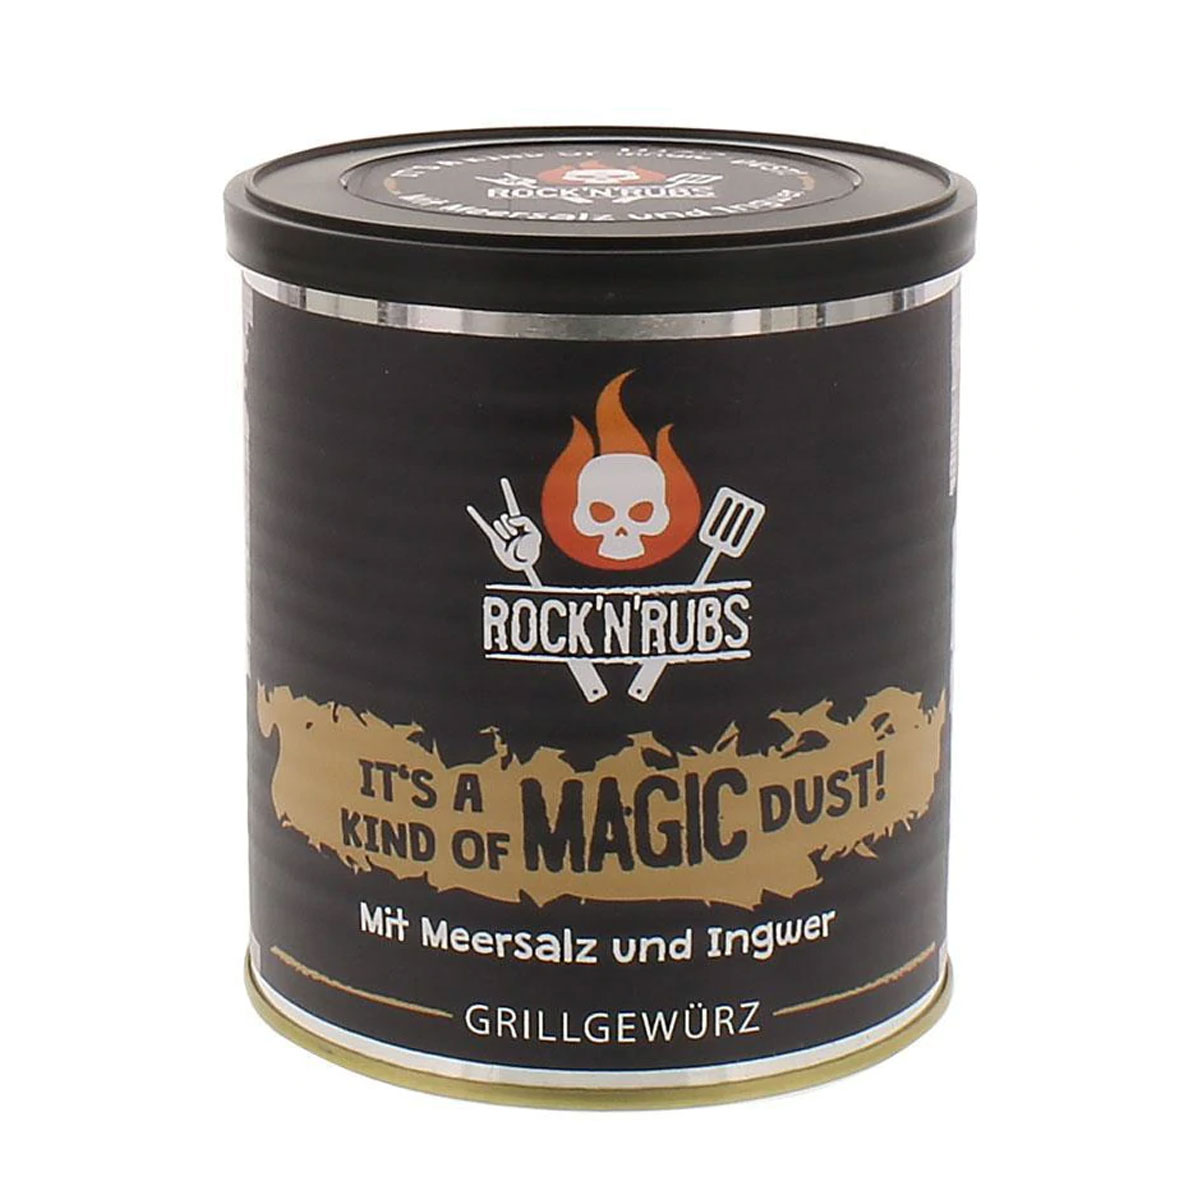 Rock'n'Rubs "It's a Kind of Magic Dust" Frontline Rub, 170g